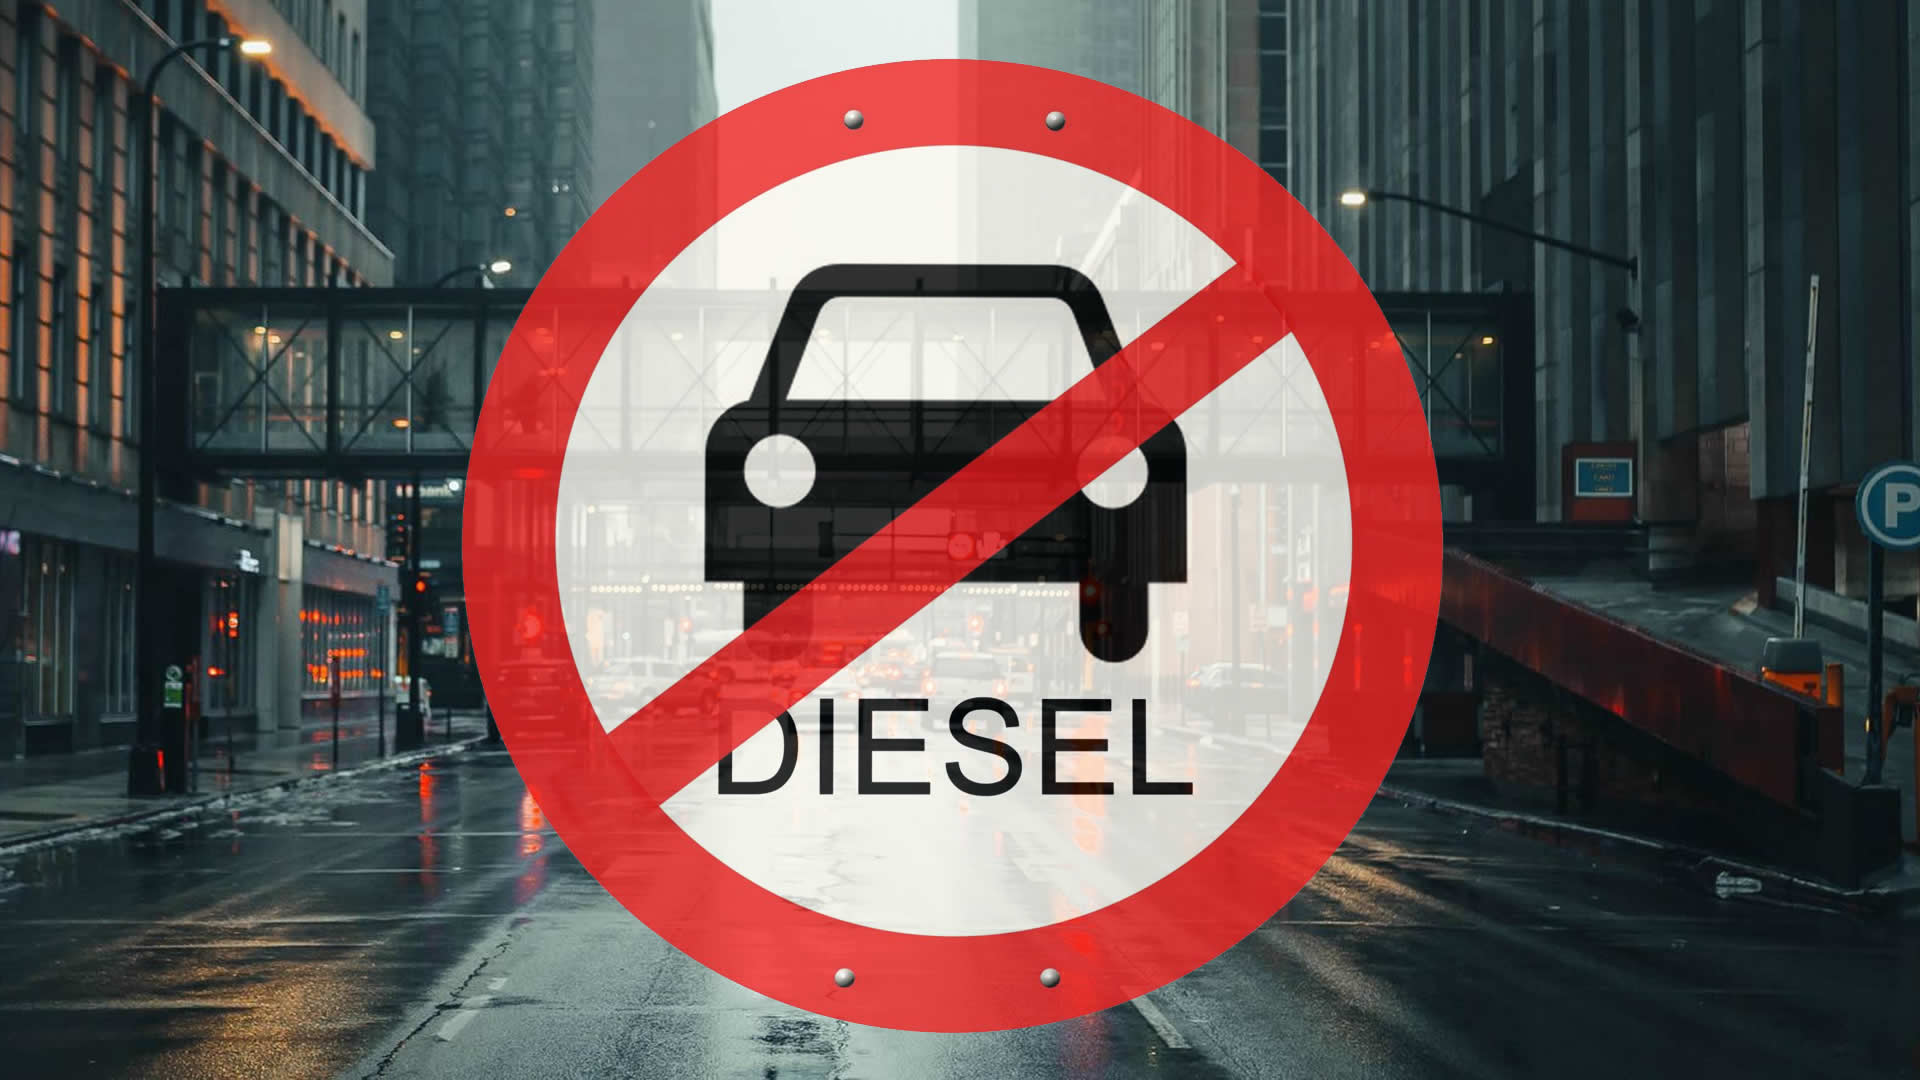 Global and European Perspectives on Diesel Vehicle Usage